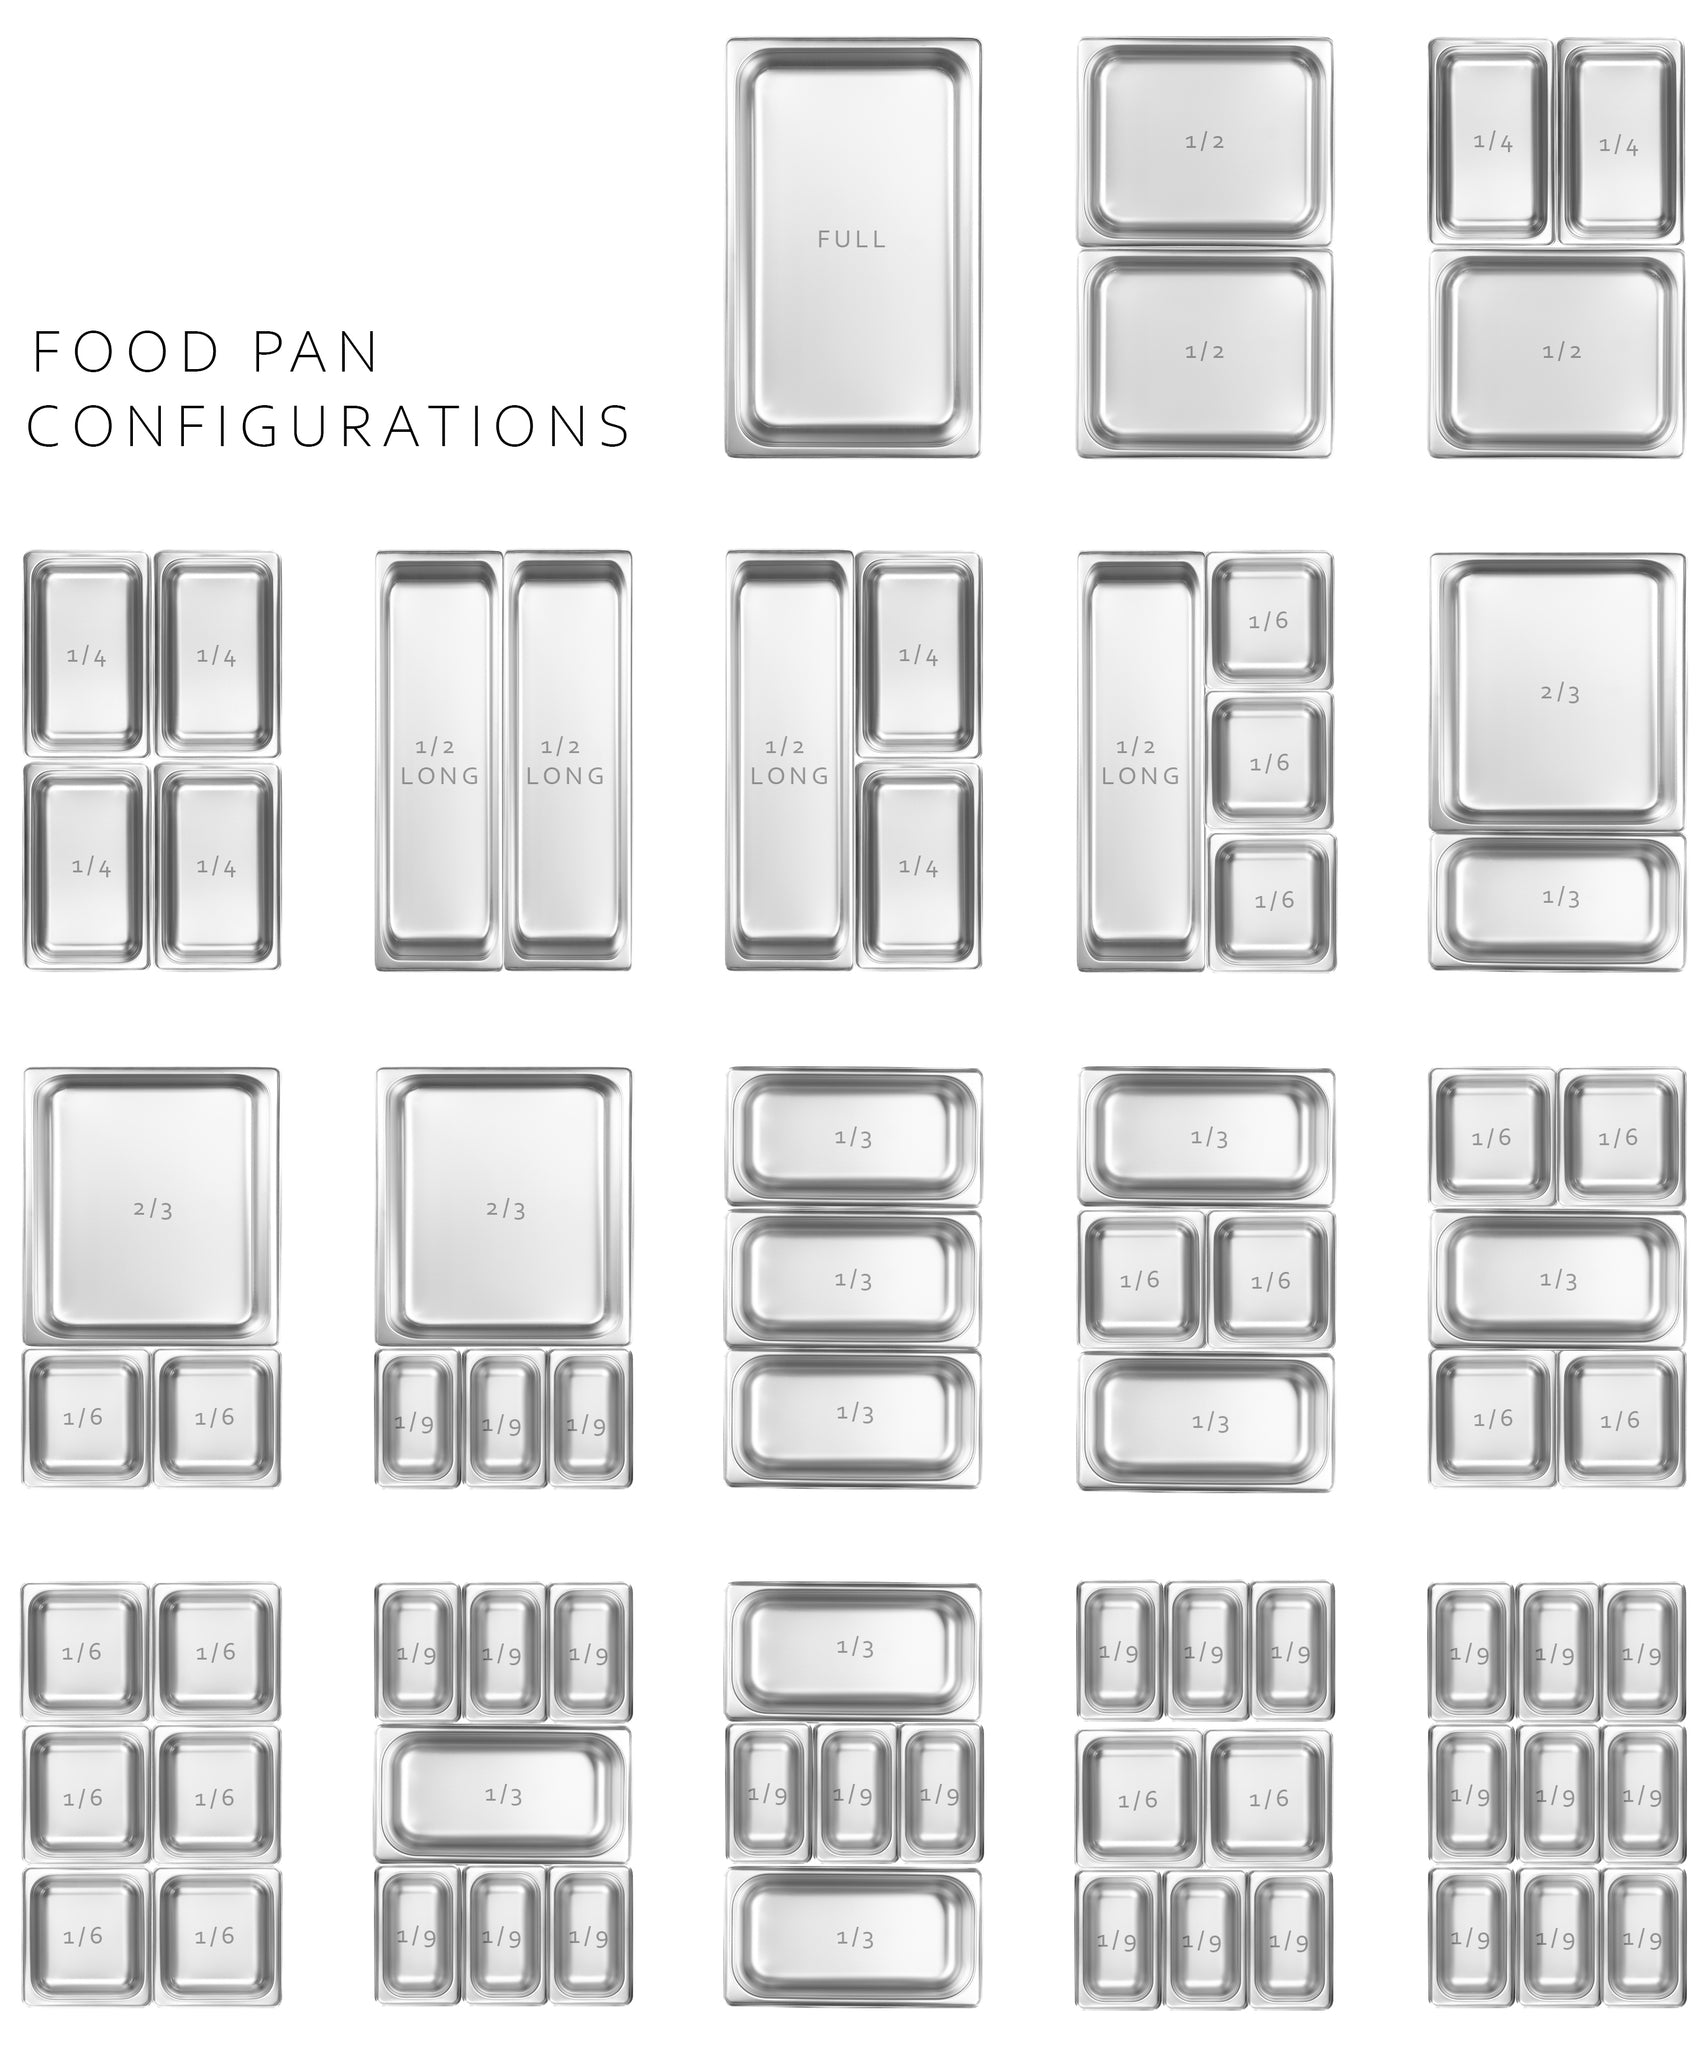 Insert pan size configuration